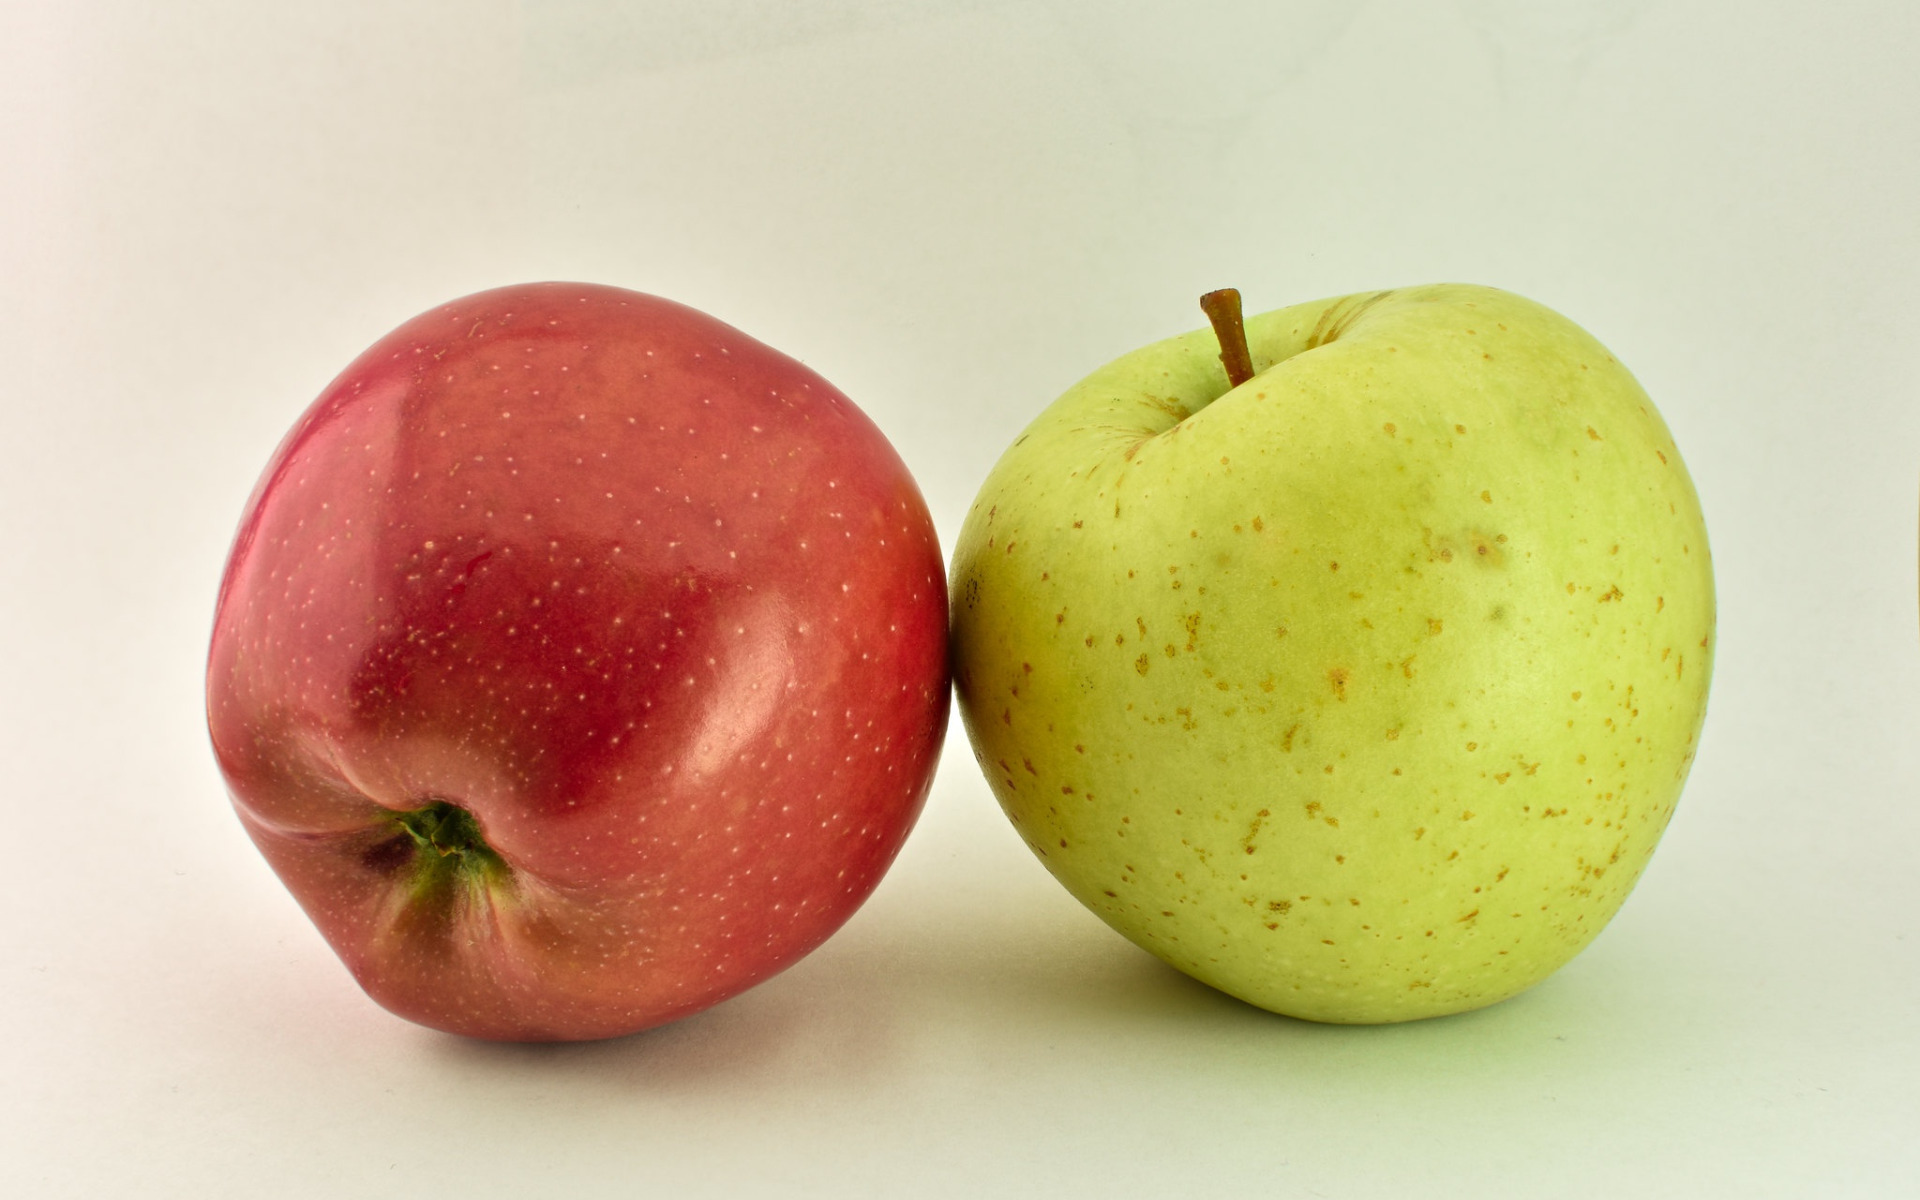 1 2 яблоко. Яблоко. Яблоко 2. Разные яблоки. Одно яблоко.